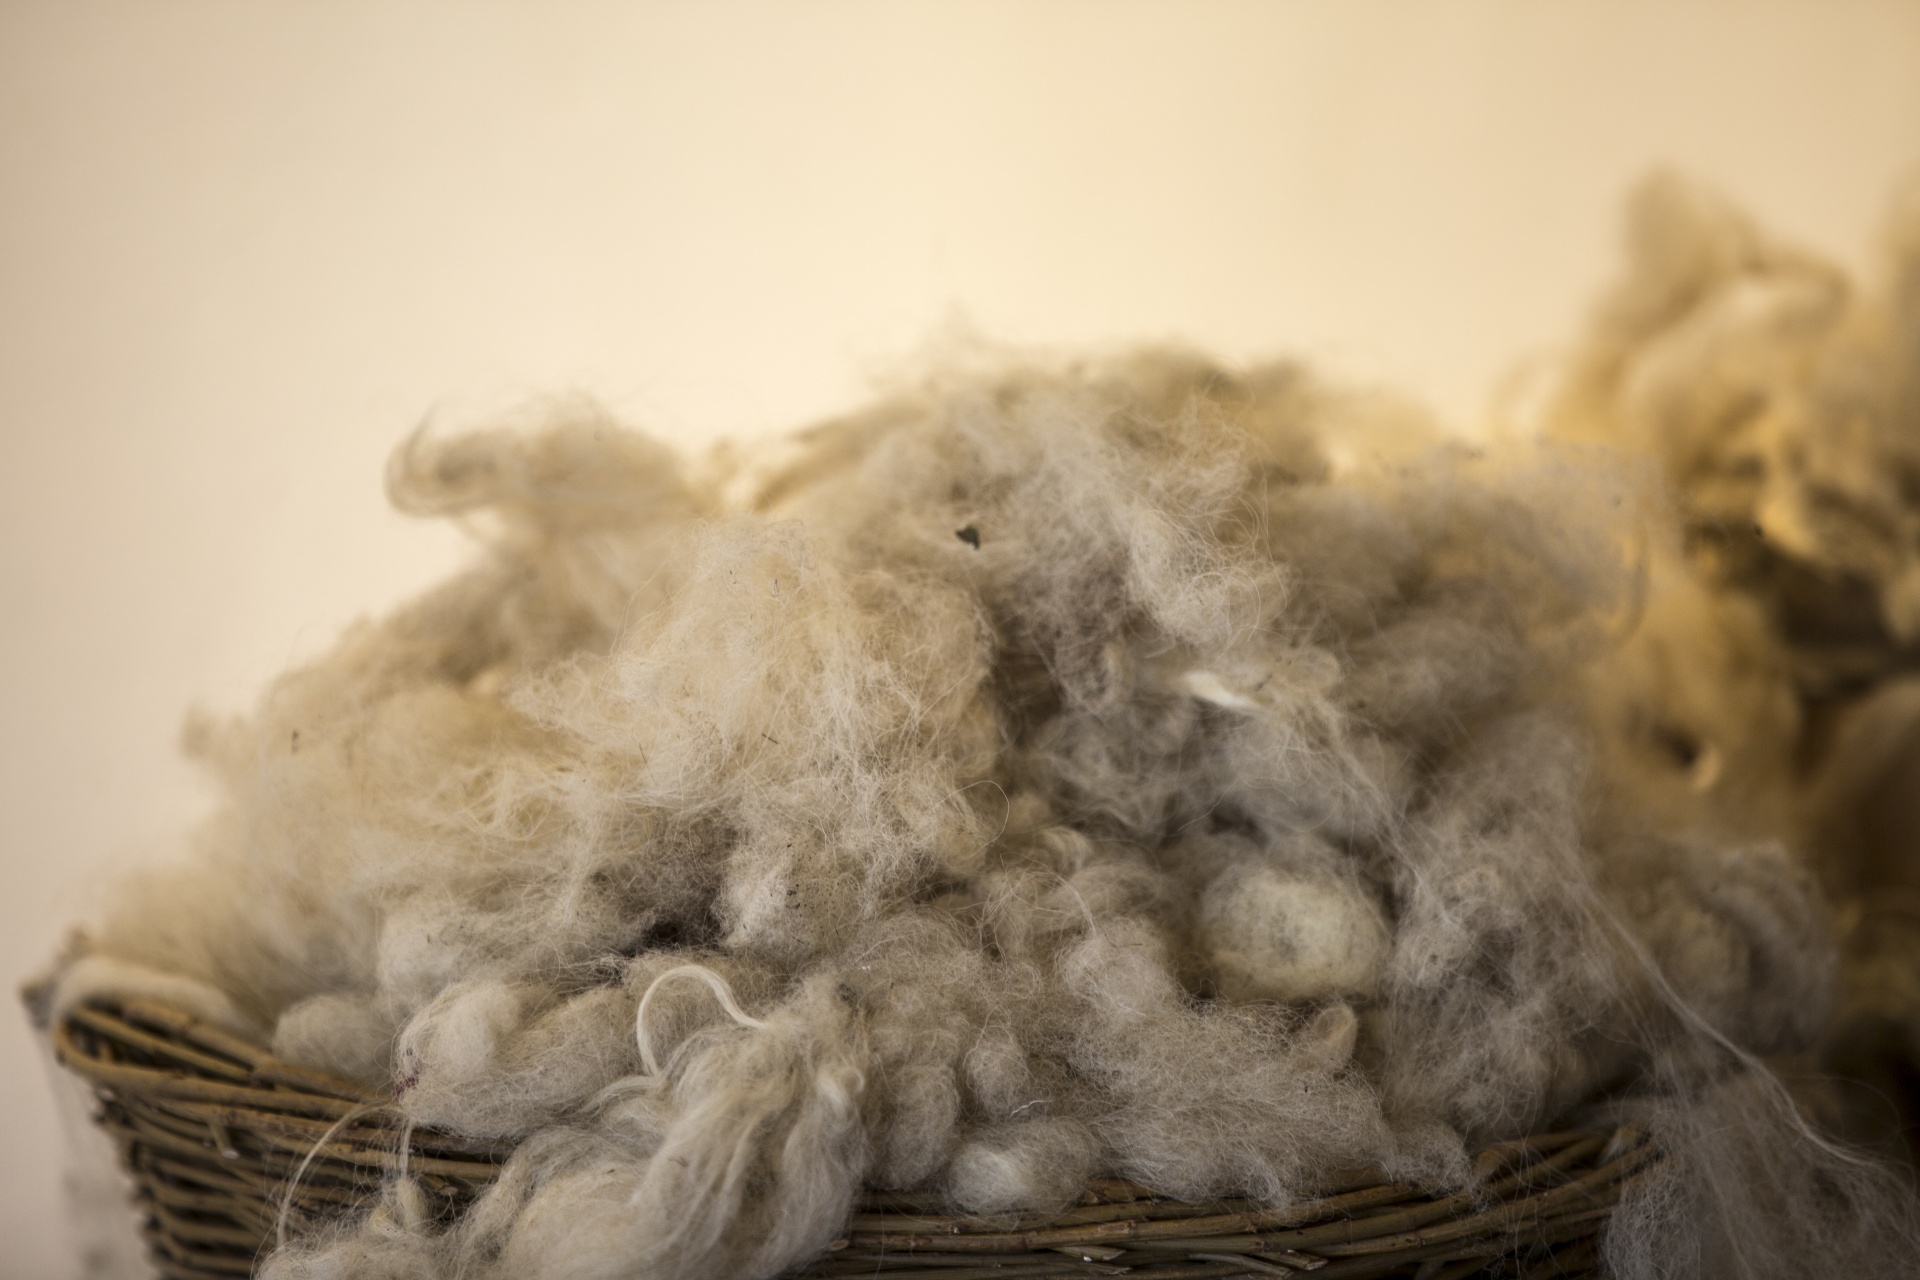 Shaven Wool In Basket